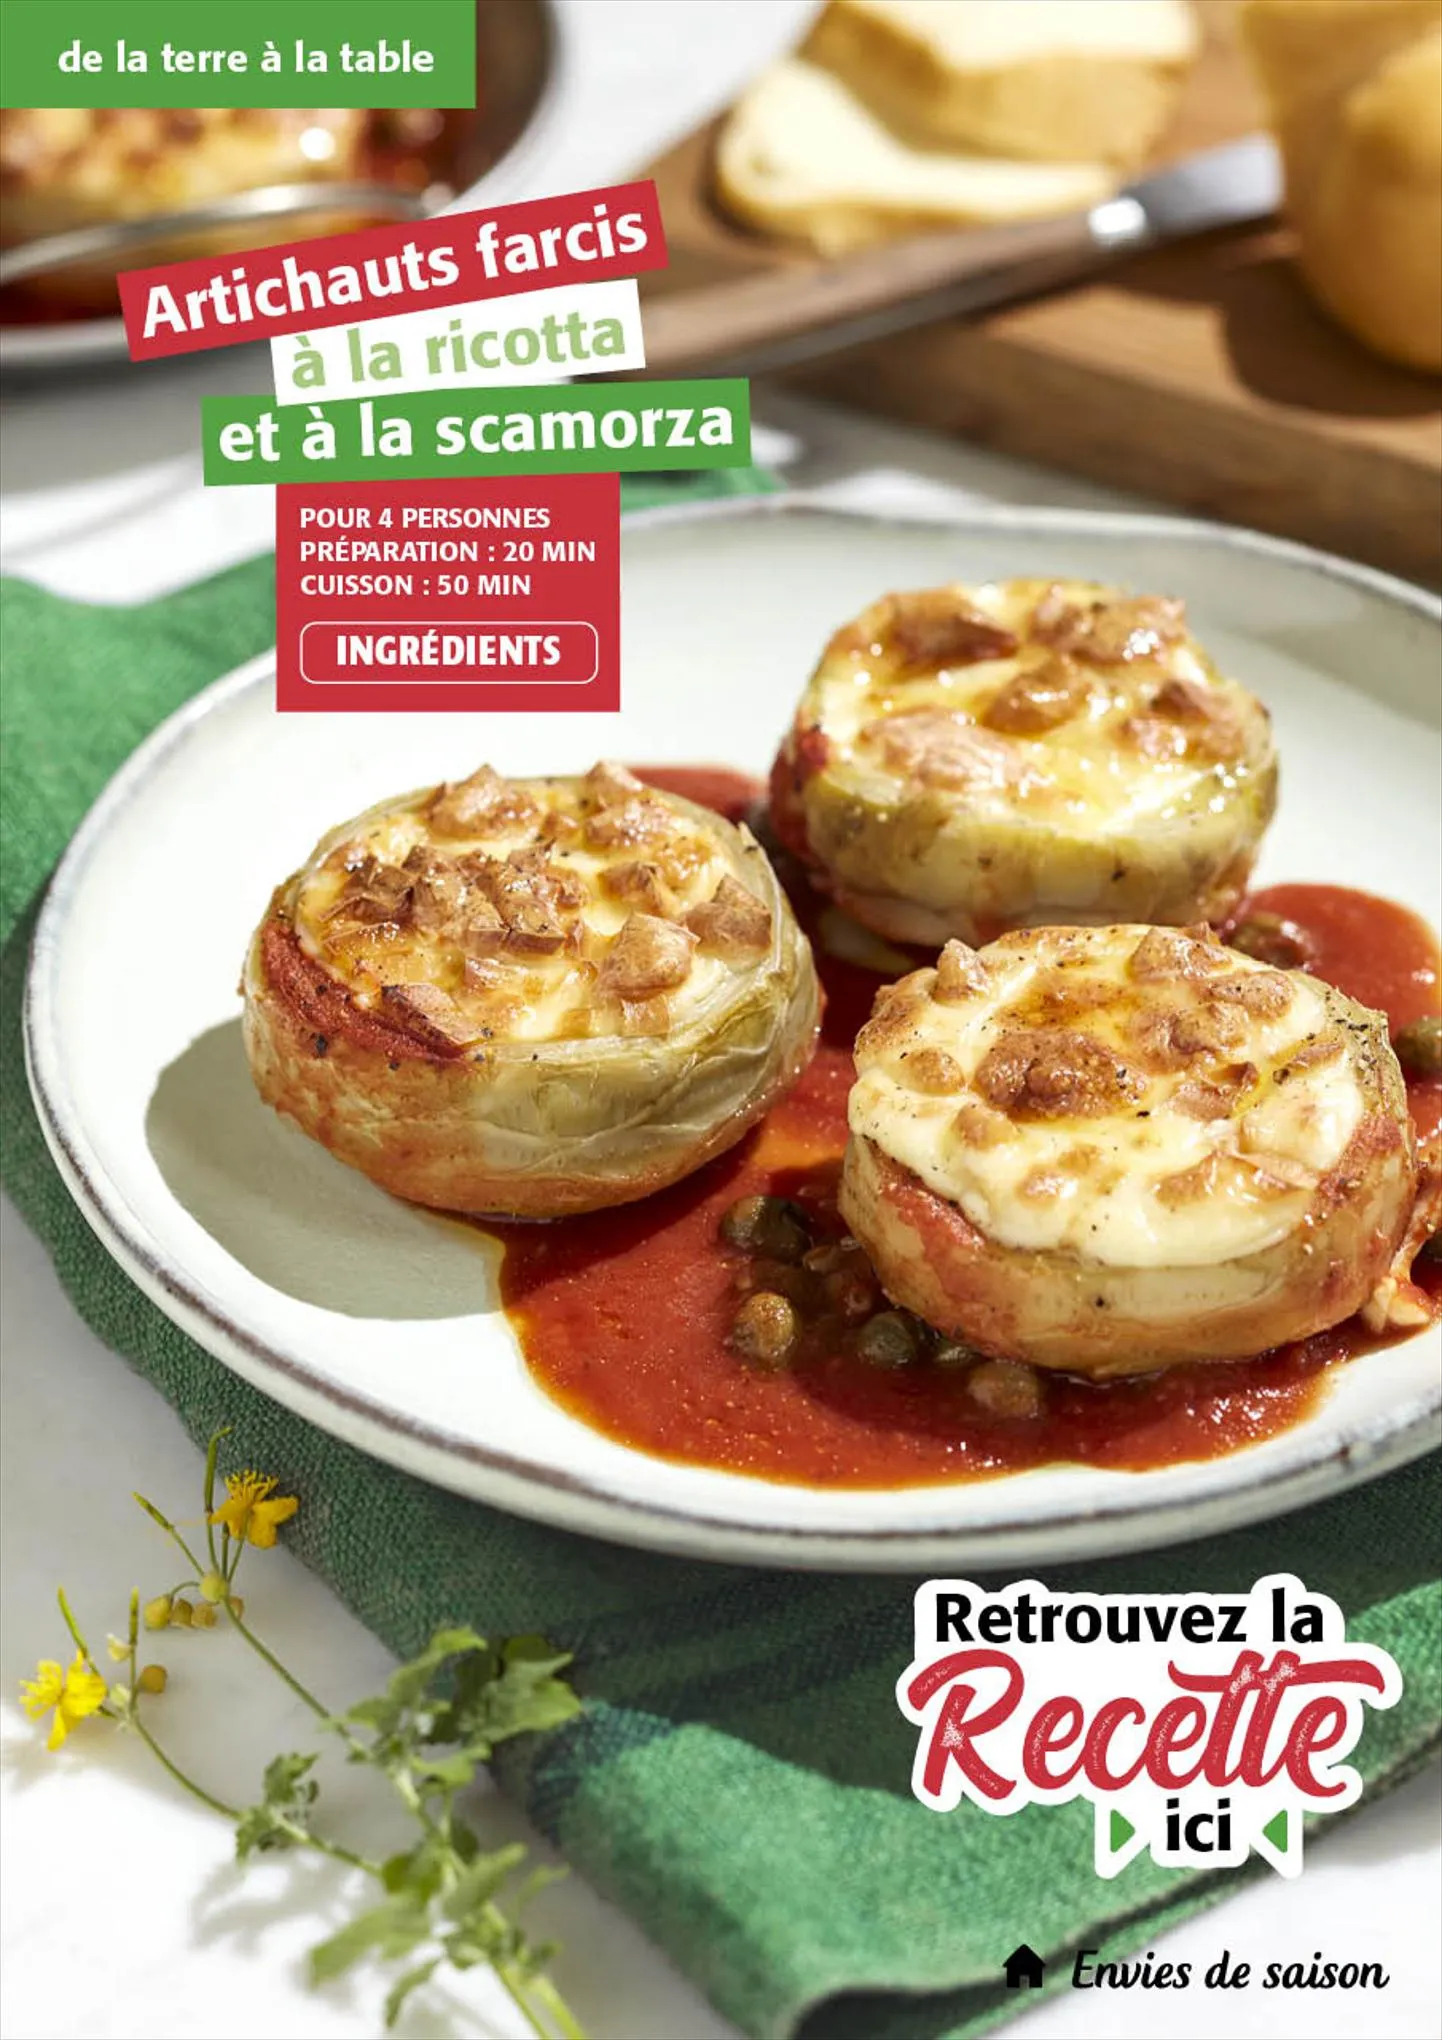 Catalogue 4 recettes dolce vita, page 00007